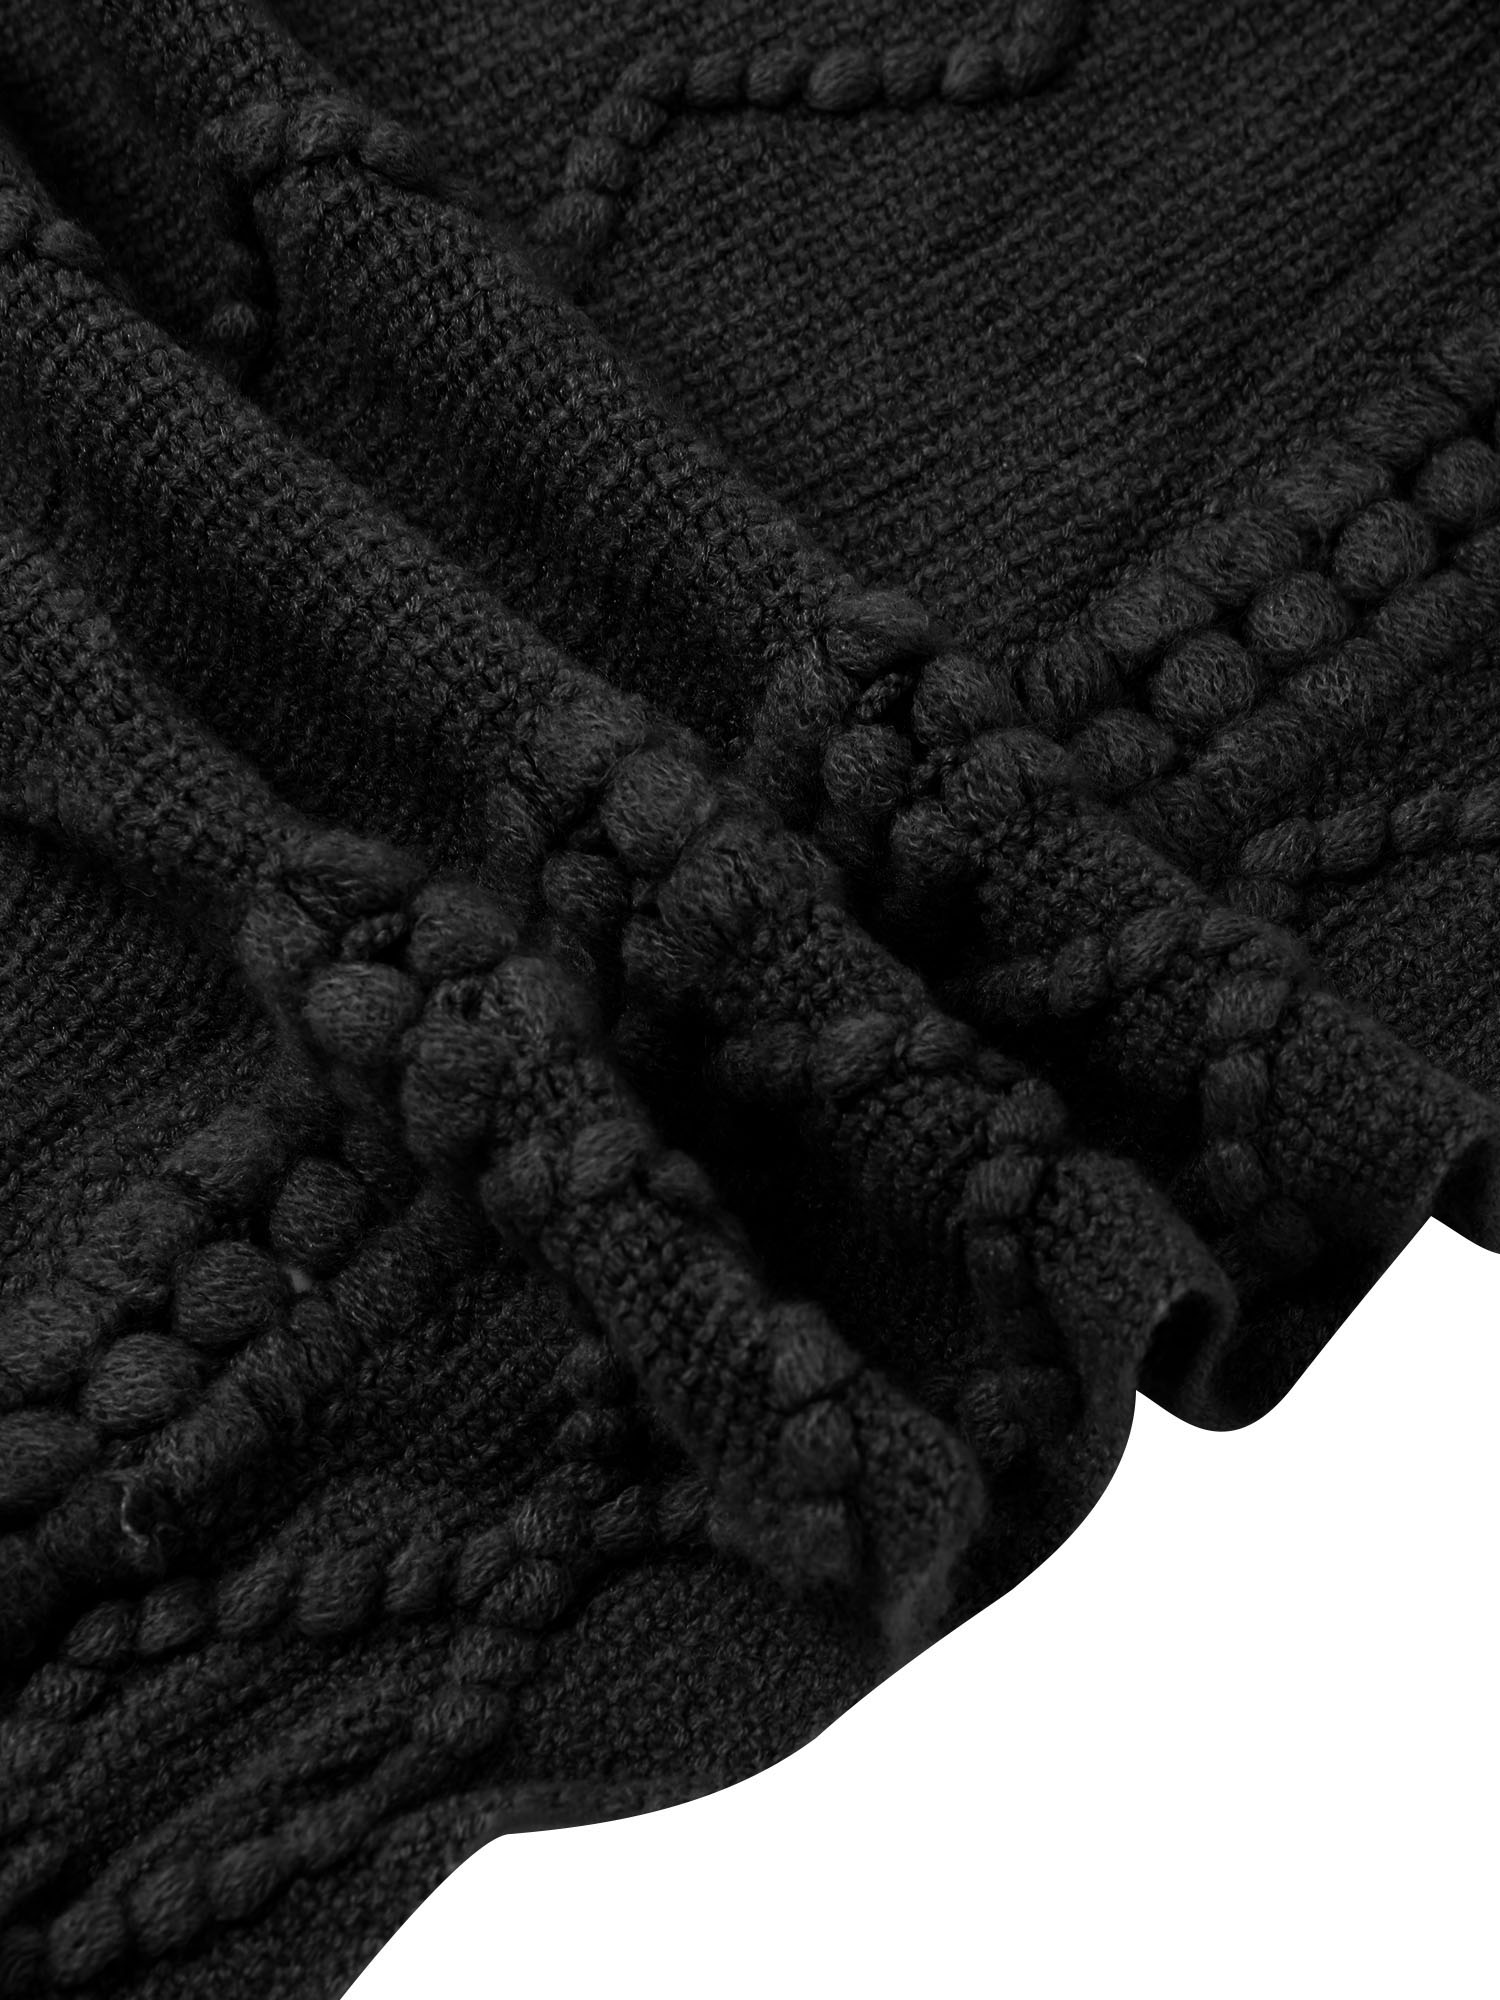 LELINTA Womens Knit Tassel Poncho Cardigan Fringed Pullover Cozy Sweater Wrap Jacket - image 4 of 4